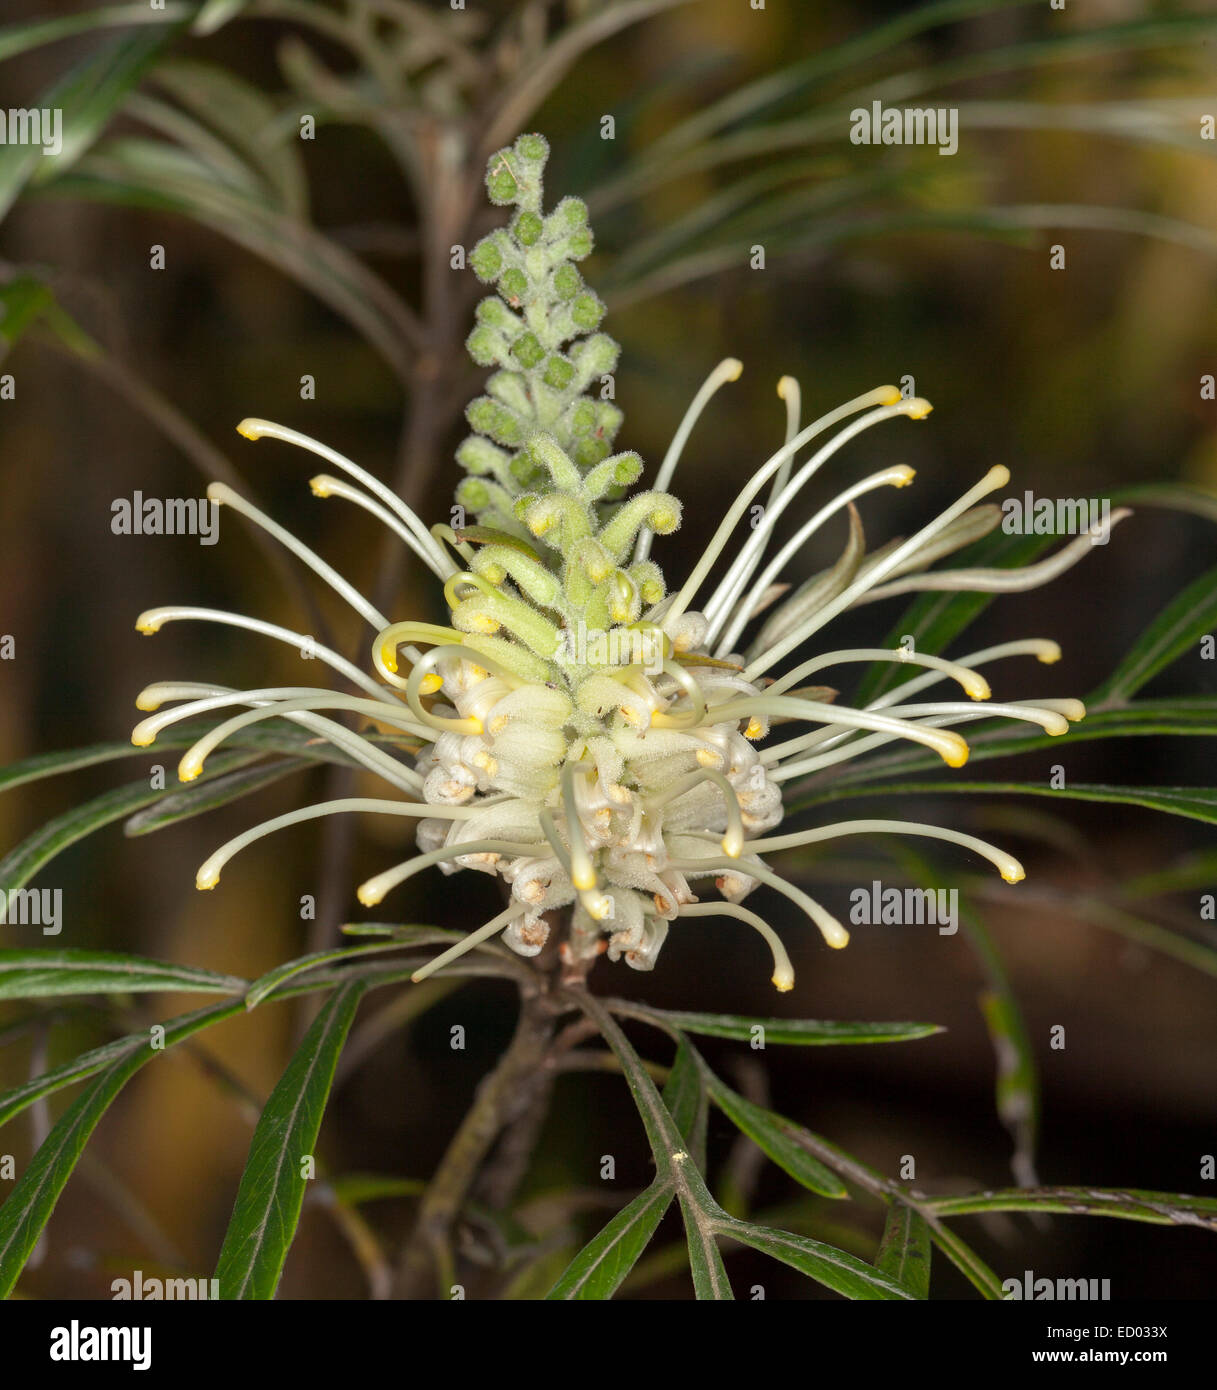 Creamy white flower of Grevillea banksii alba, an Australian native plant in the wild, against background of dark green leaves Stock Photo